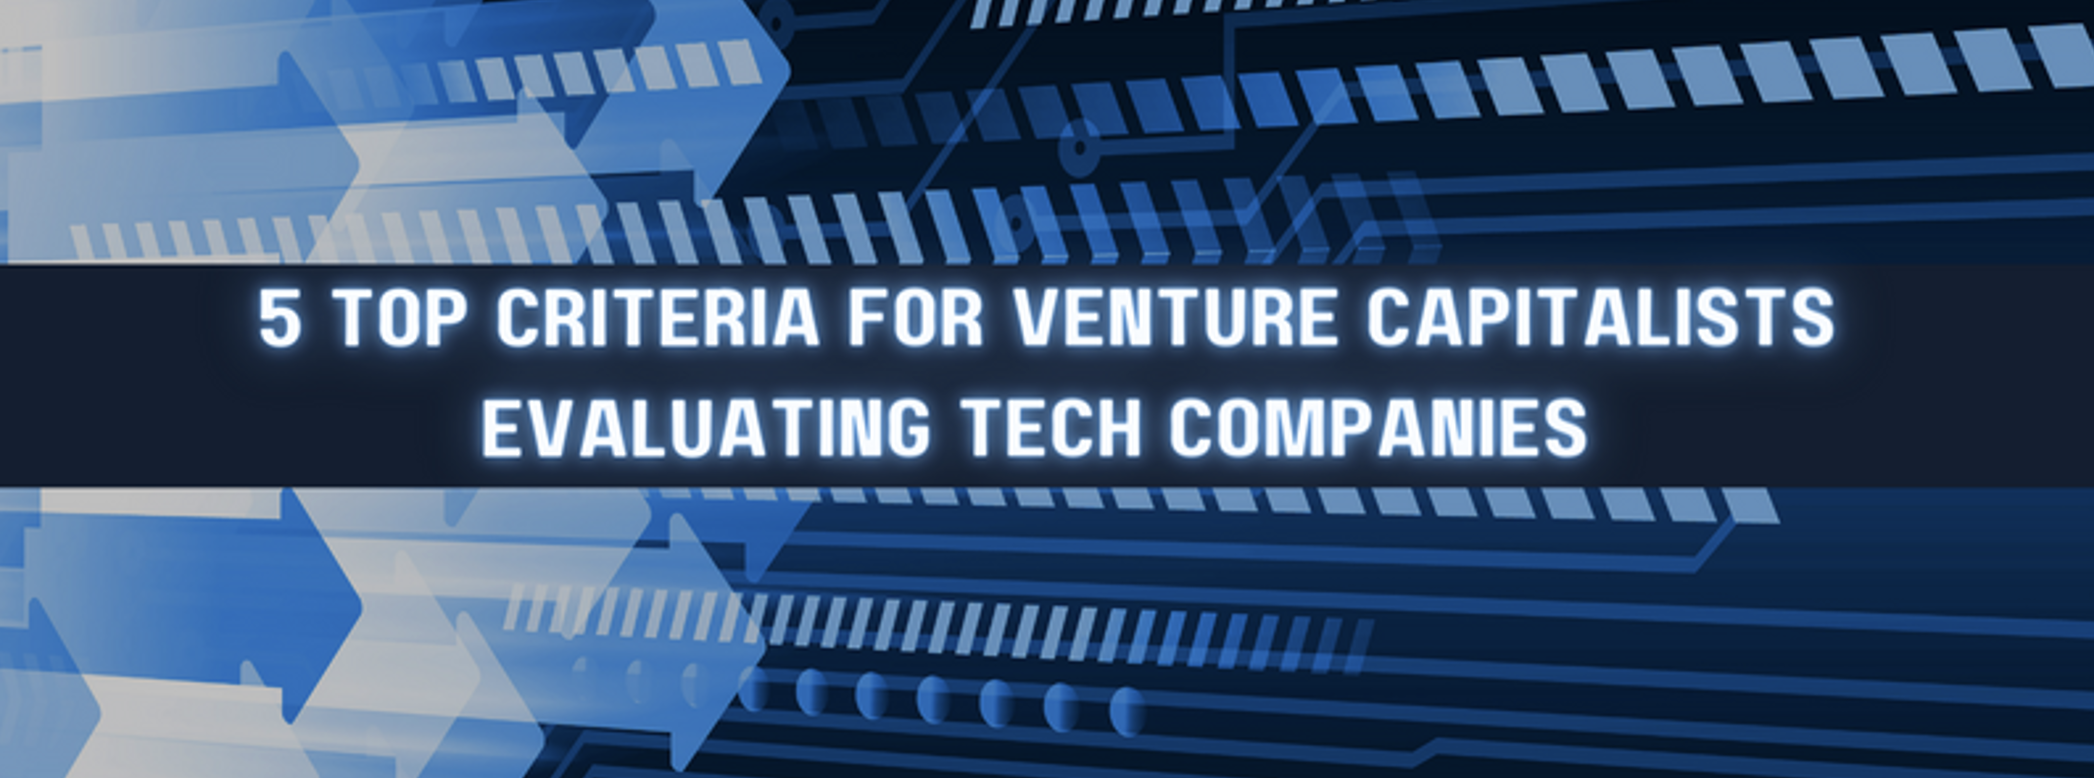 5 Top Criteria for Venture Capitalists Evaluating Tech Companies